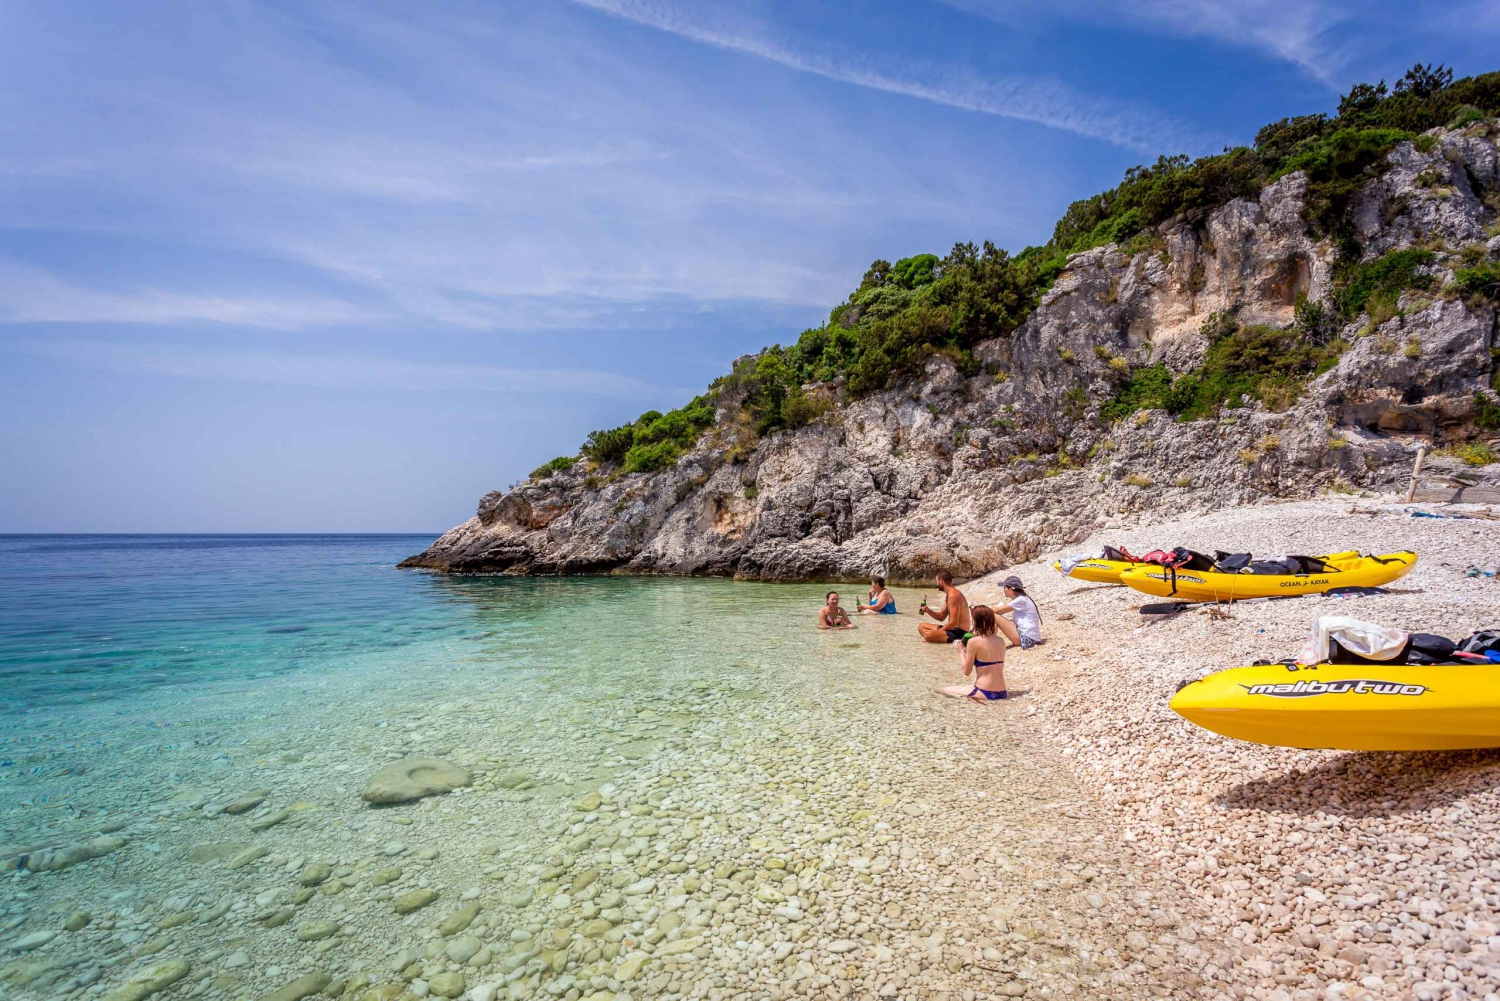 Full-Day Kayaking Tour in Dugi Otok from Zadar